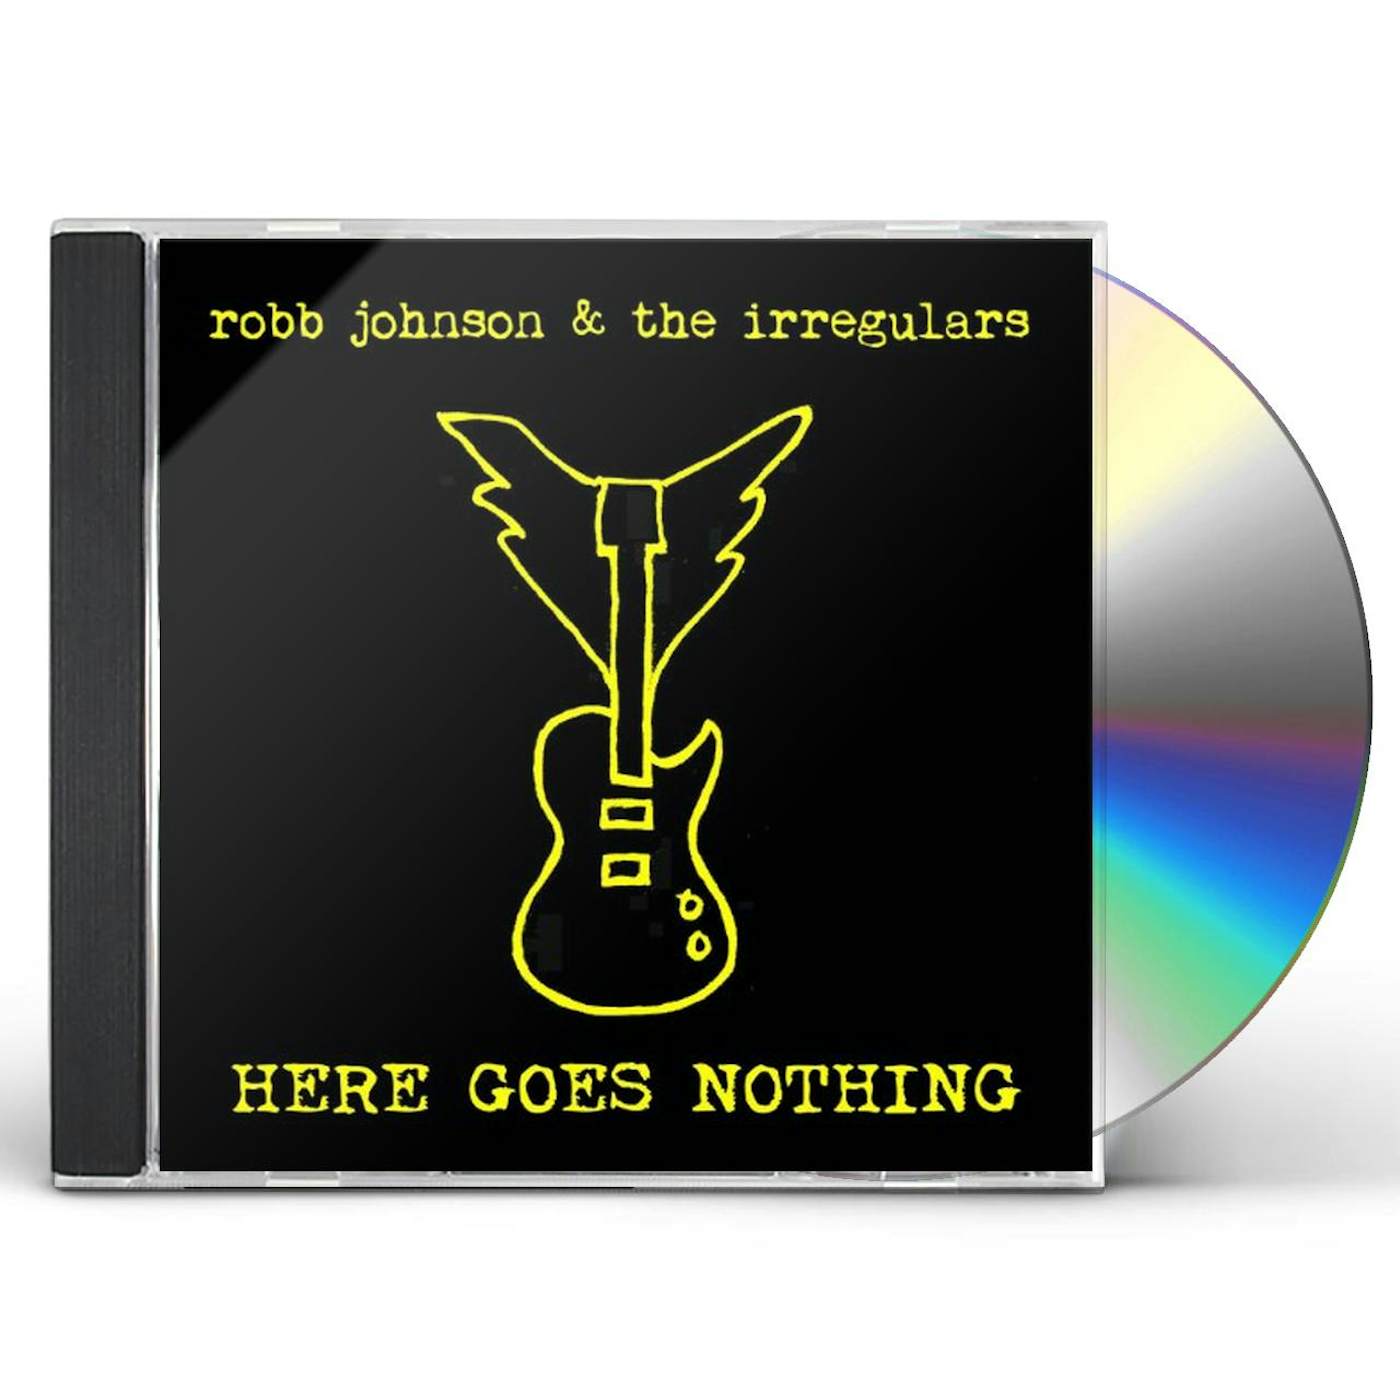 Robb Johnson & the Irregulars HERE GOES NOTHING CD